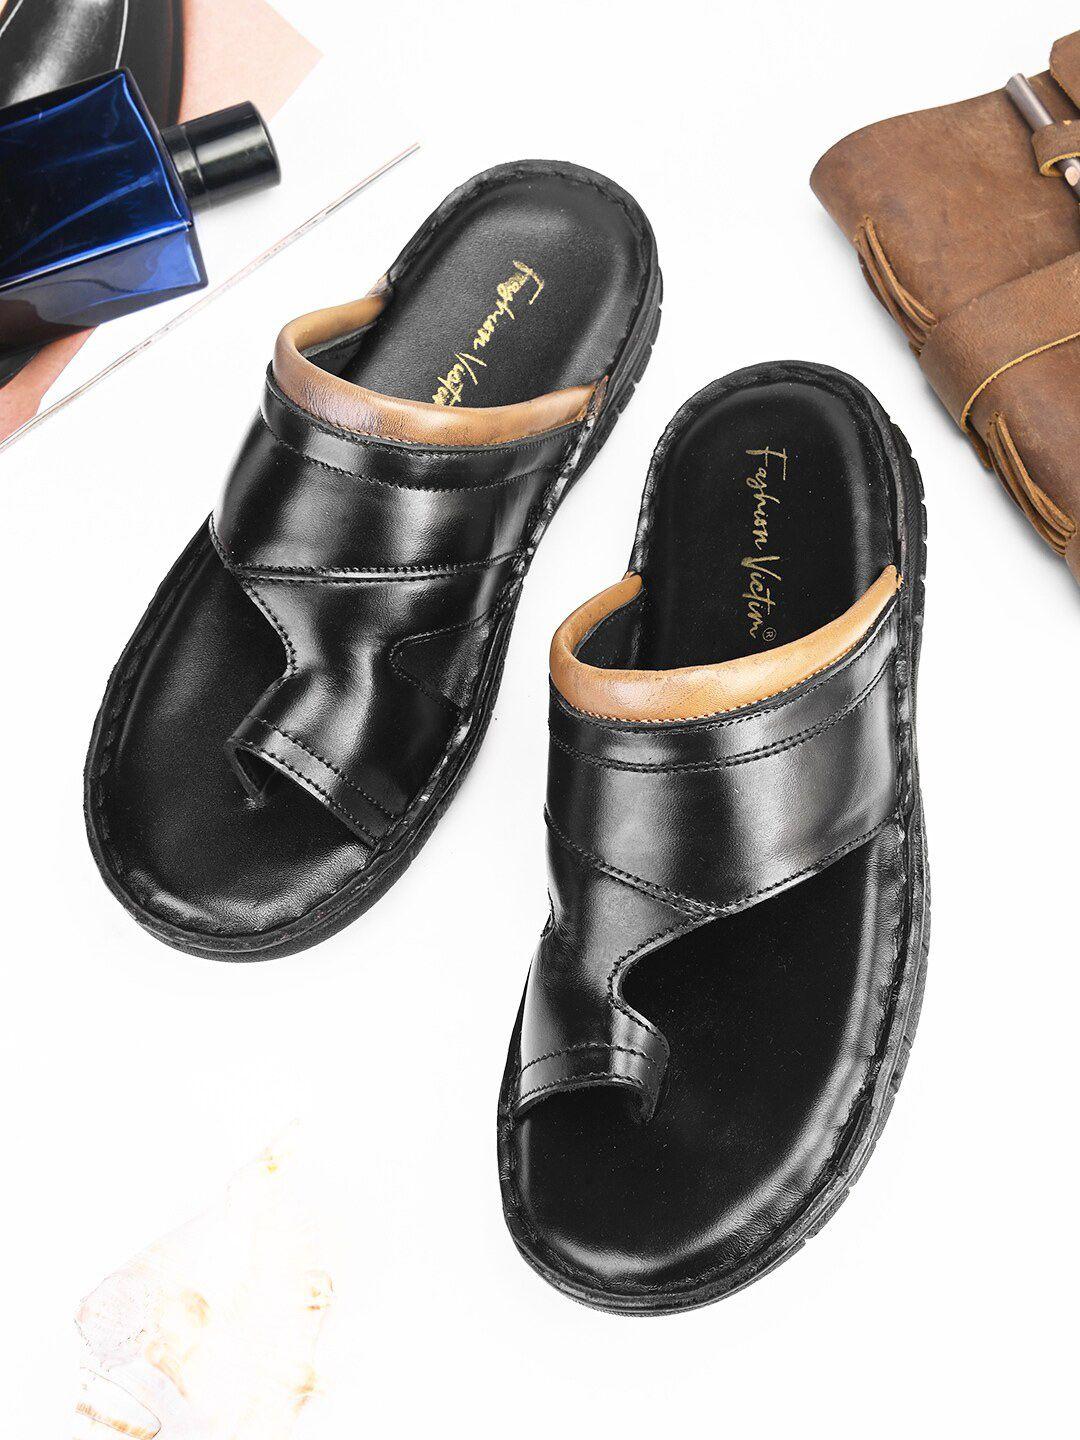 fashion victim men one toe leather comfort sandals